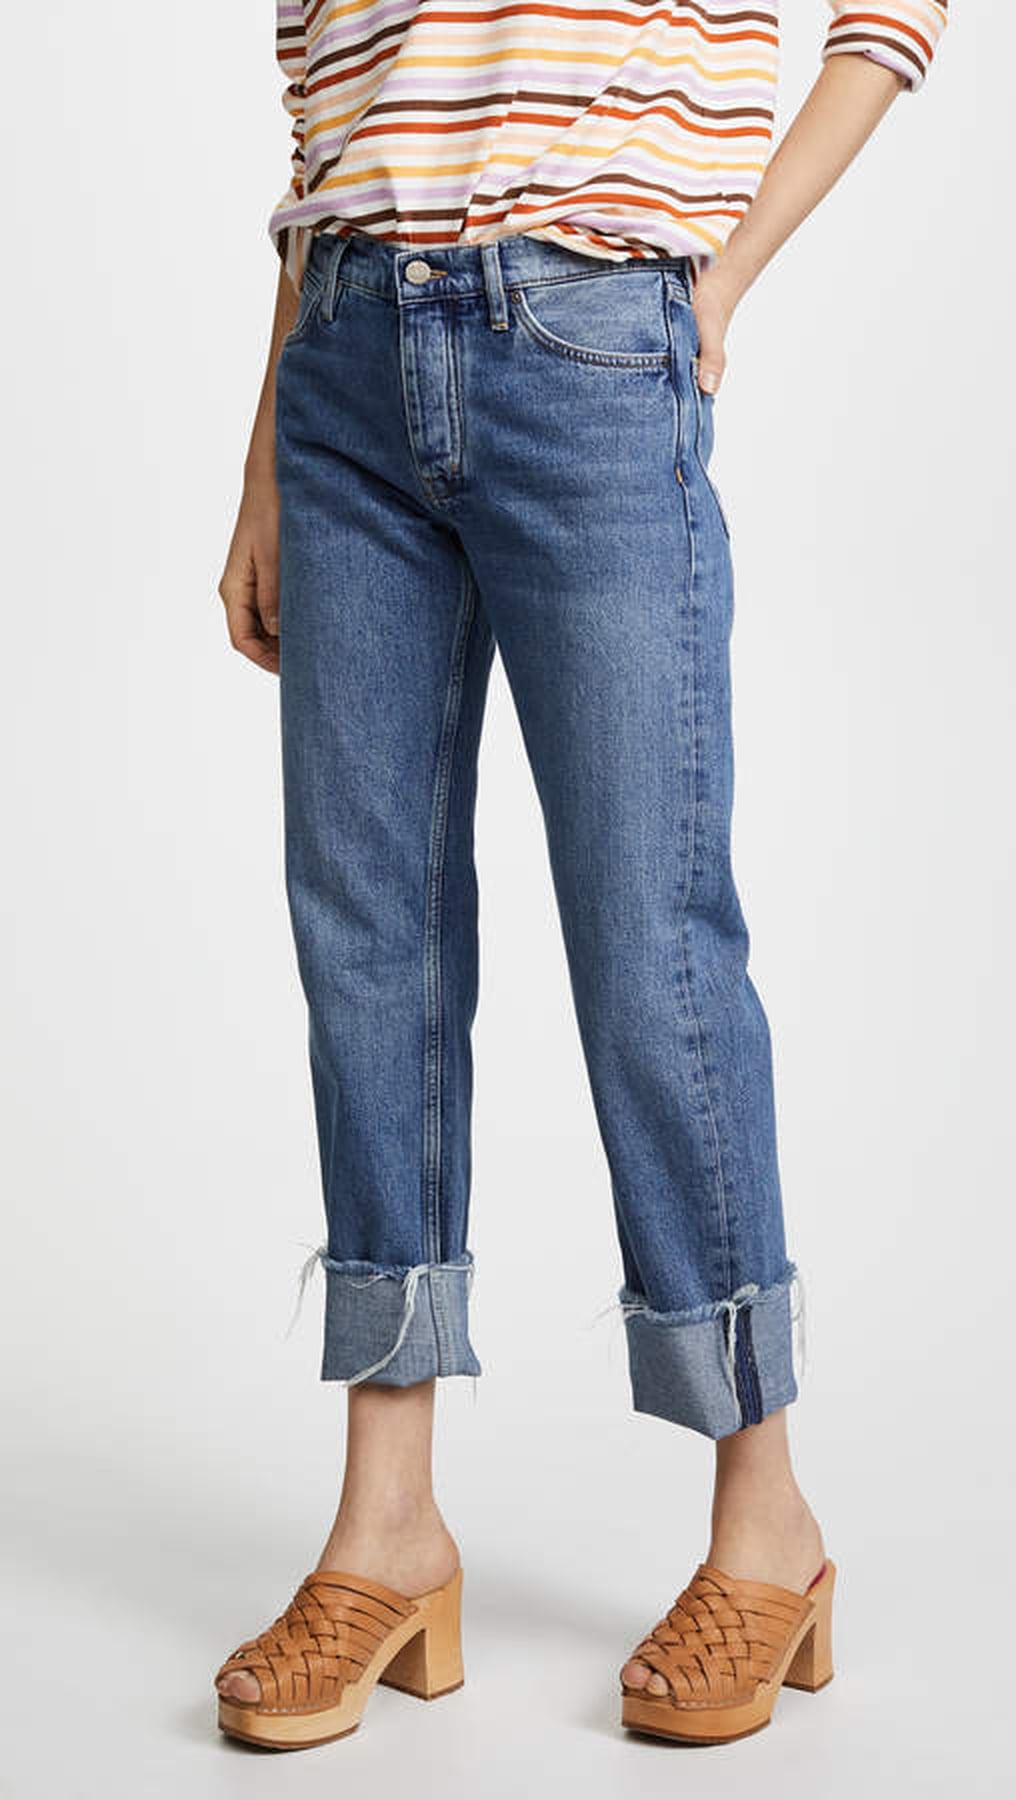 Selena Gomez Wearing Cuffed Jeans | POPSUGAR Fashion